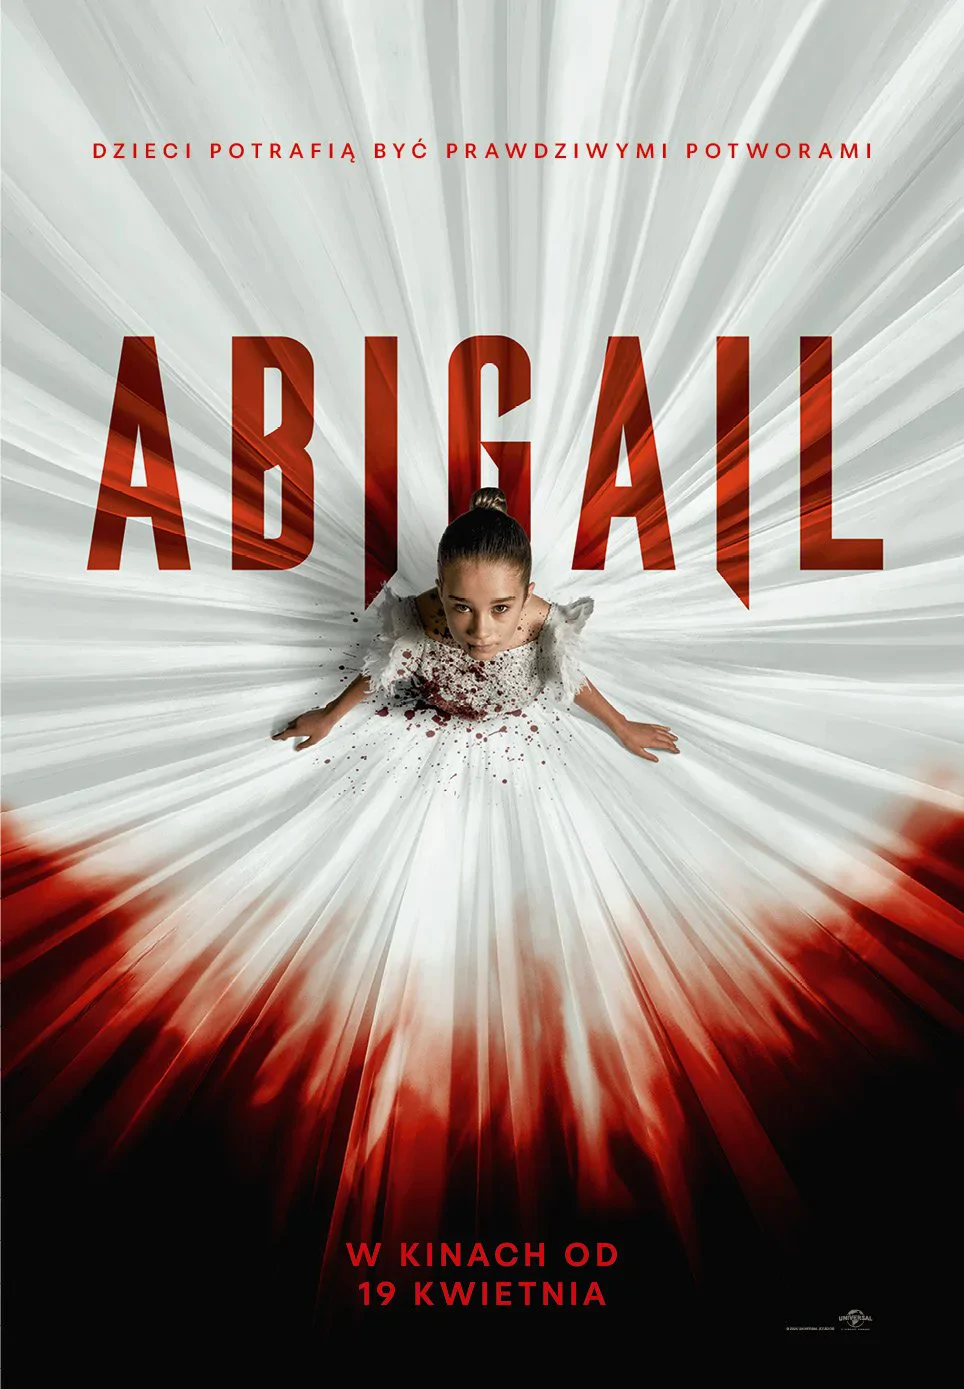 Abigail - recenzja filmu. Krwawa baletnica